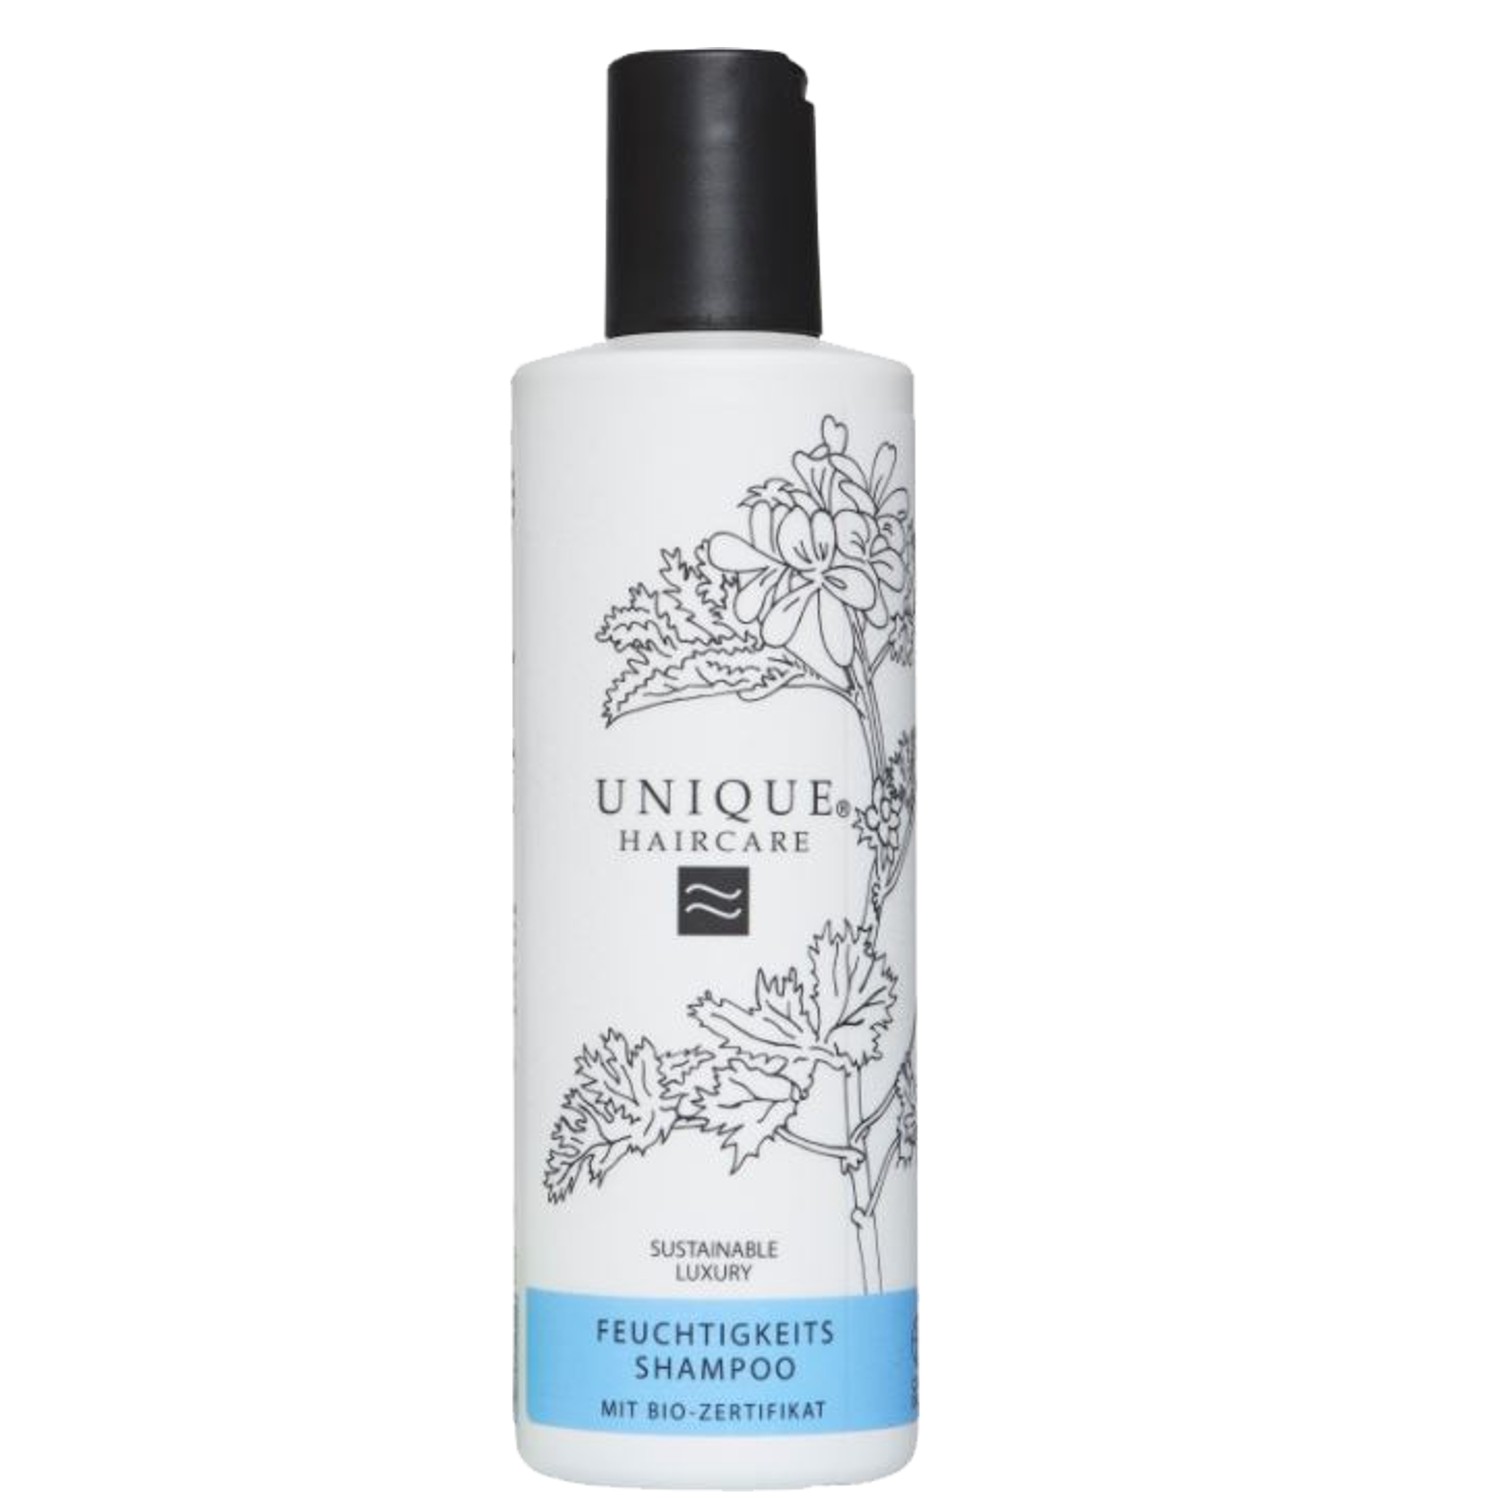 UNIQUE Haircare Moisturizing Shampoo 250 ml